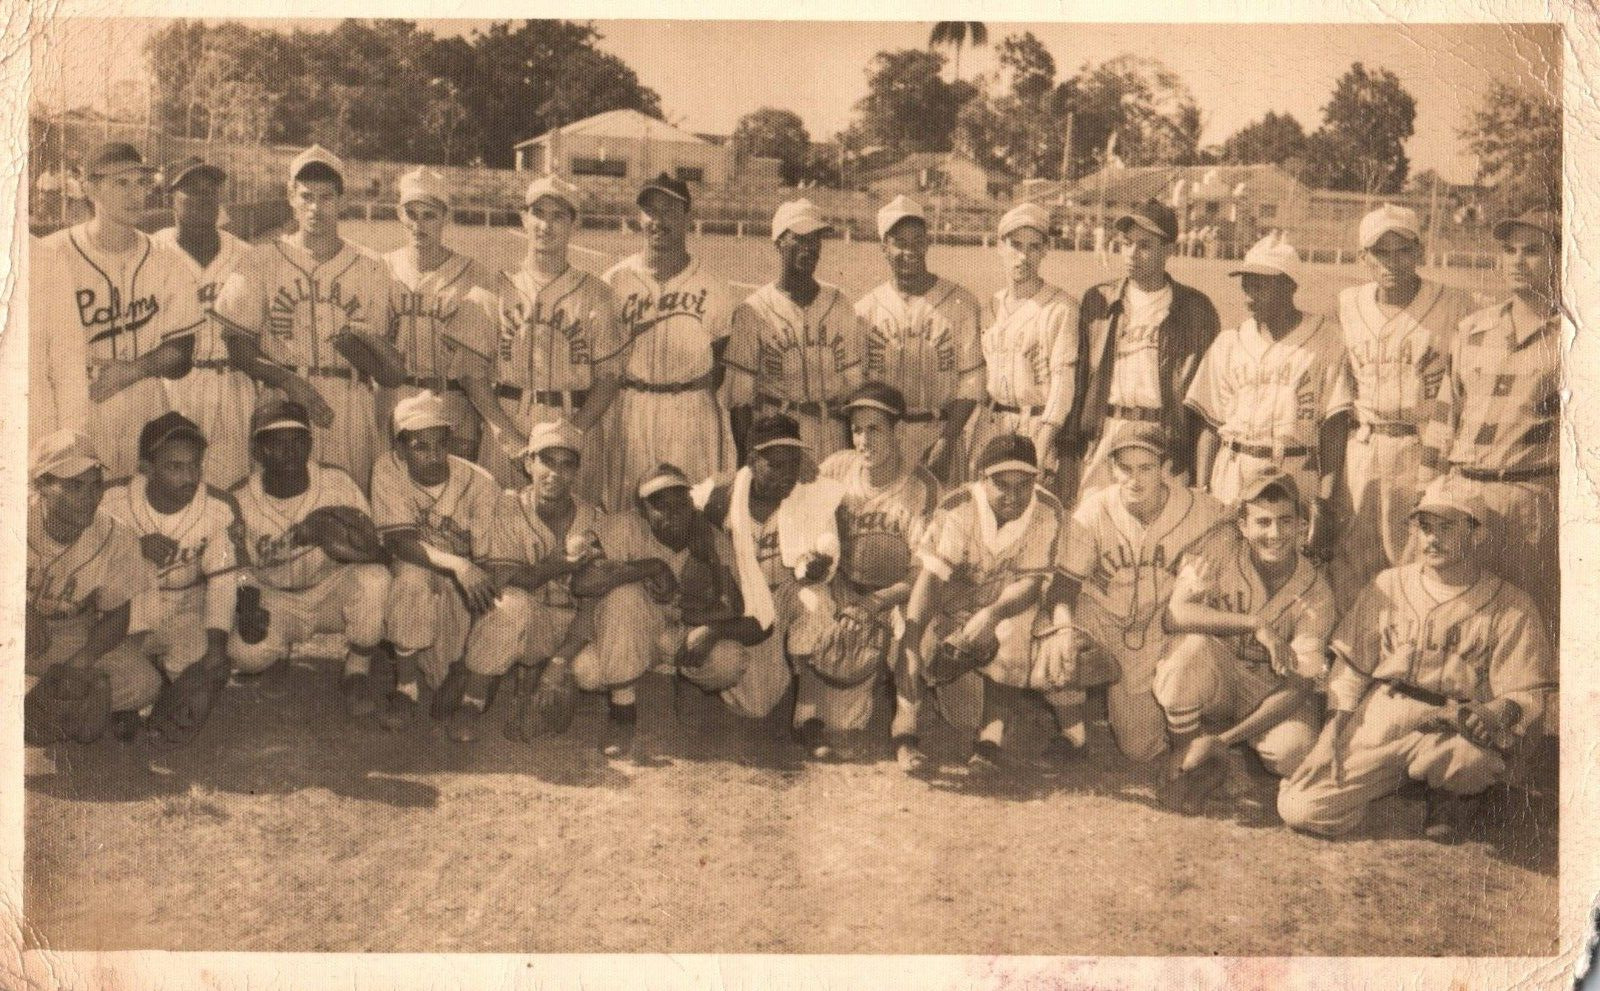 CUBA CUBAN TOURNAMENT OPENNING DAY AMATEUR BASEBALL 1930s PHOTO 200